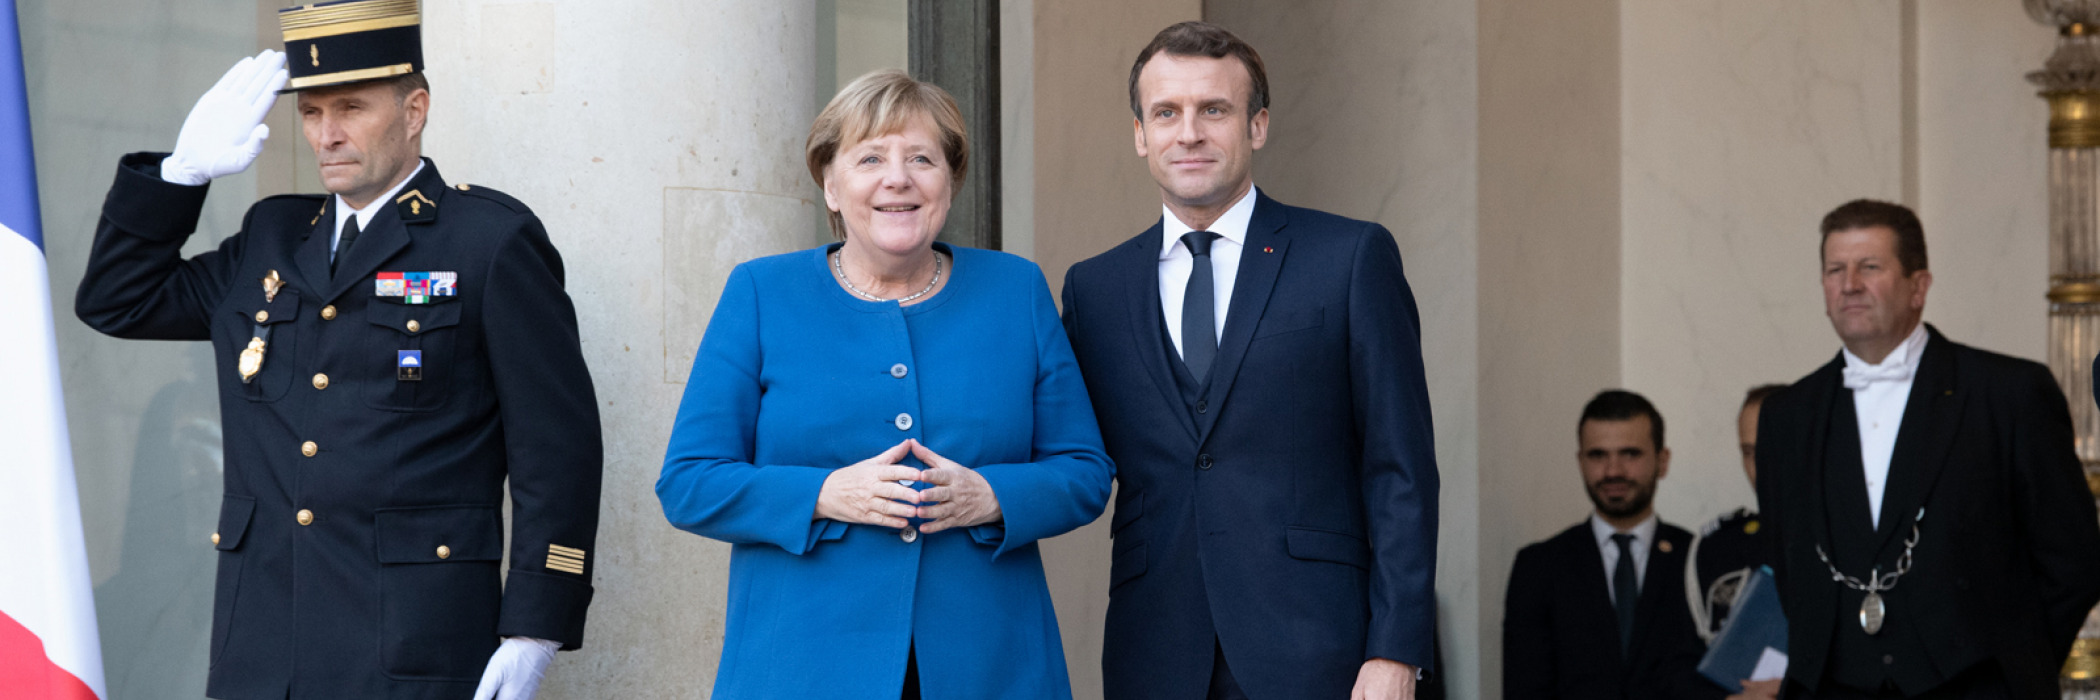 President Emmanuel Macron and Chancellor Angela Merkel aim to strengthen Franco-German cooperation and integration.